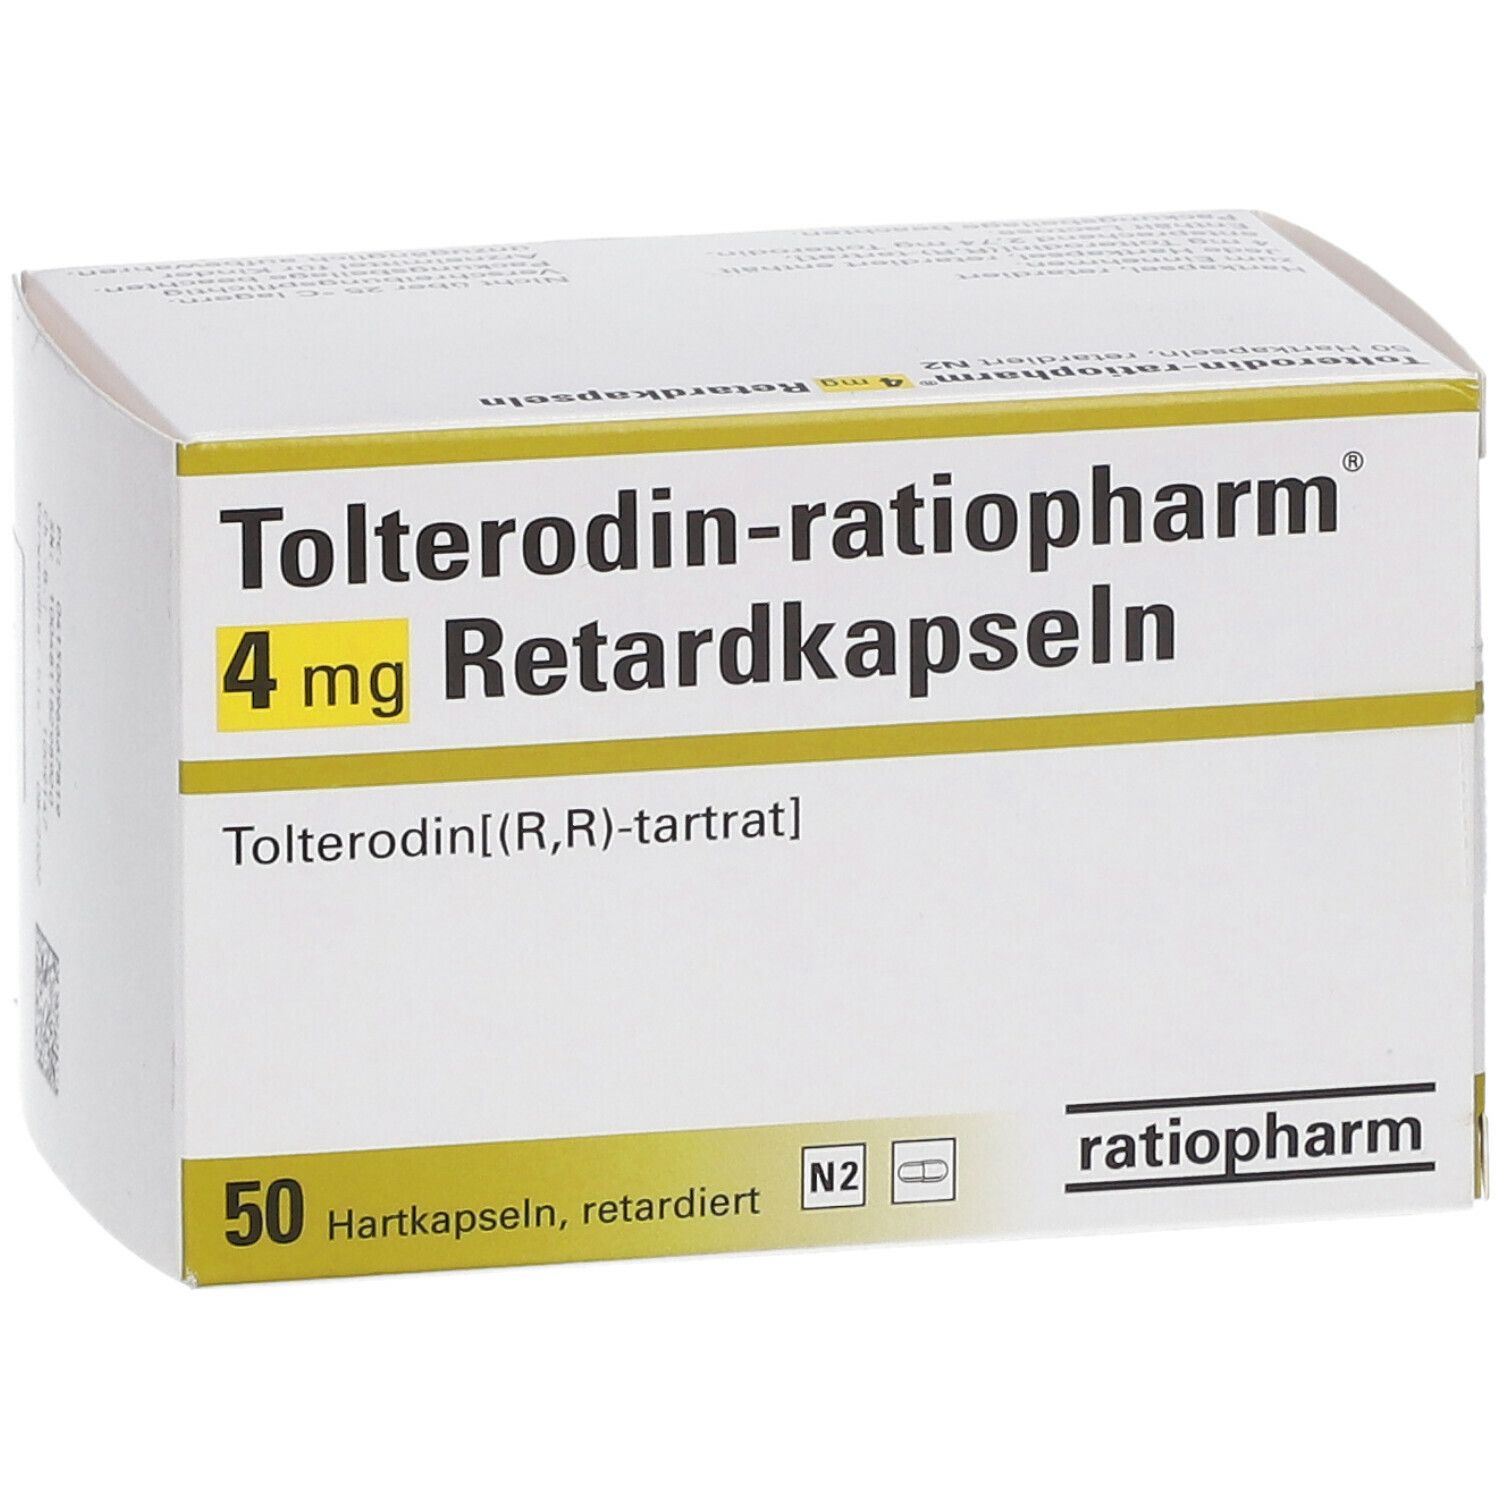 Tolterodin-ratiopharm® 4 mg